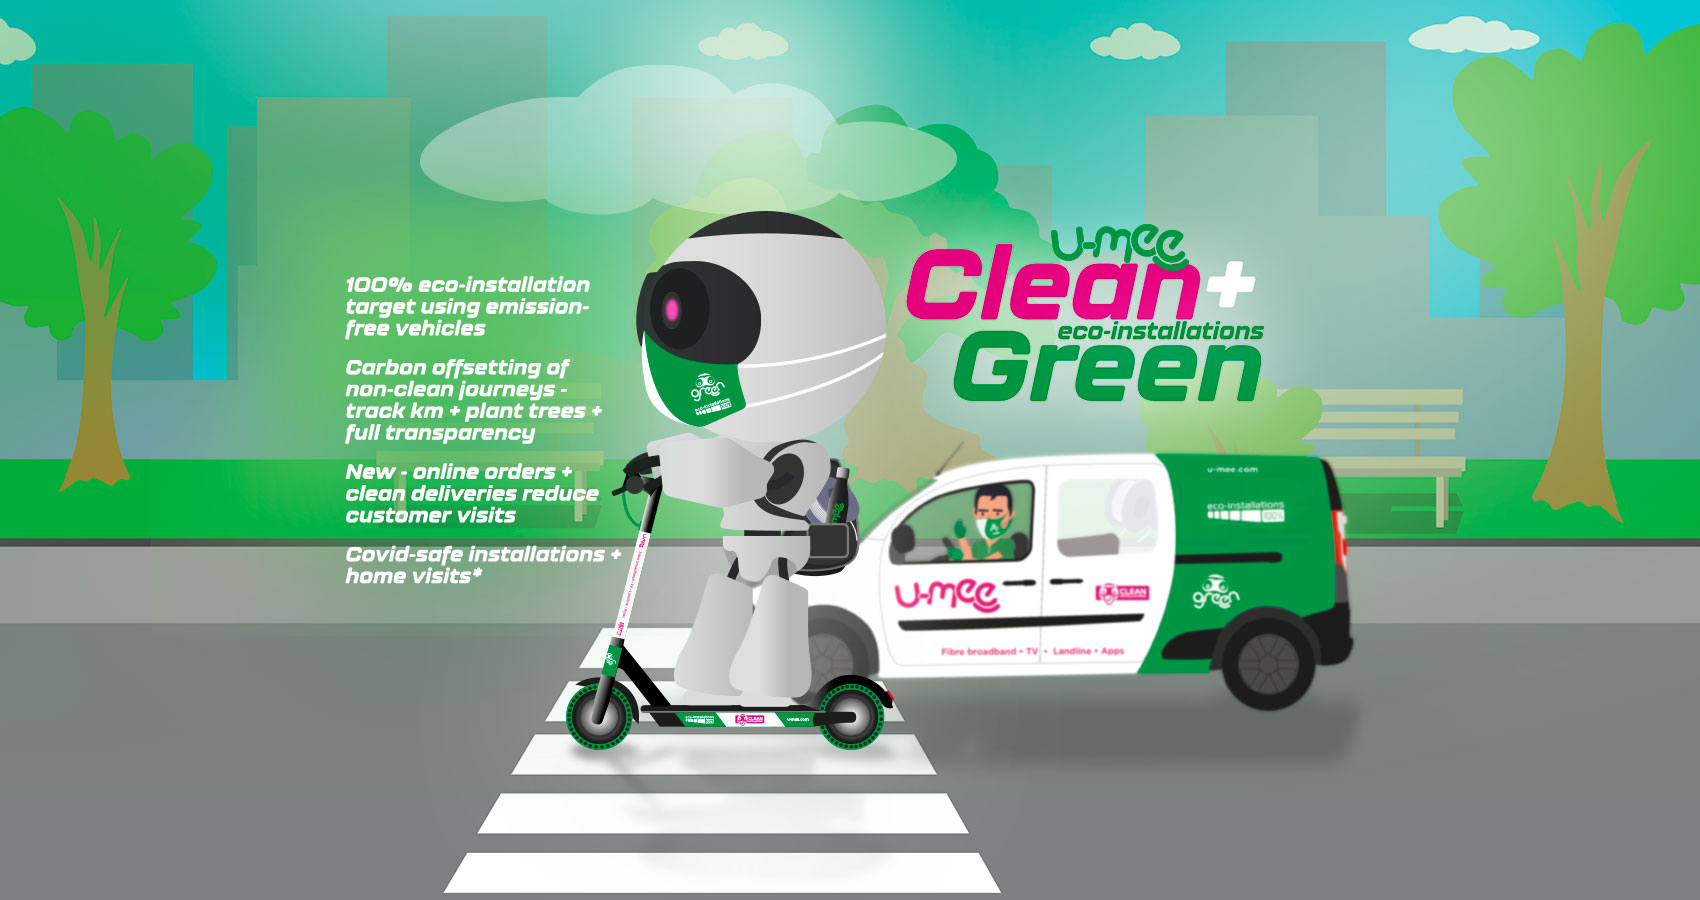 green & clean - u-mee